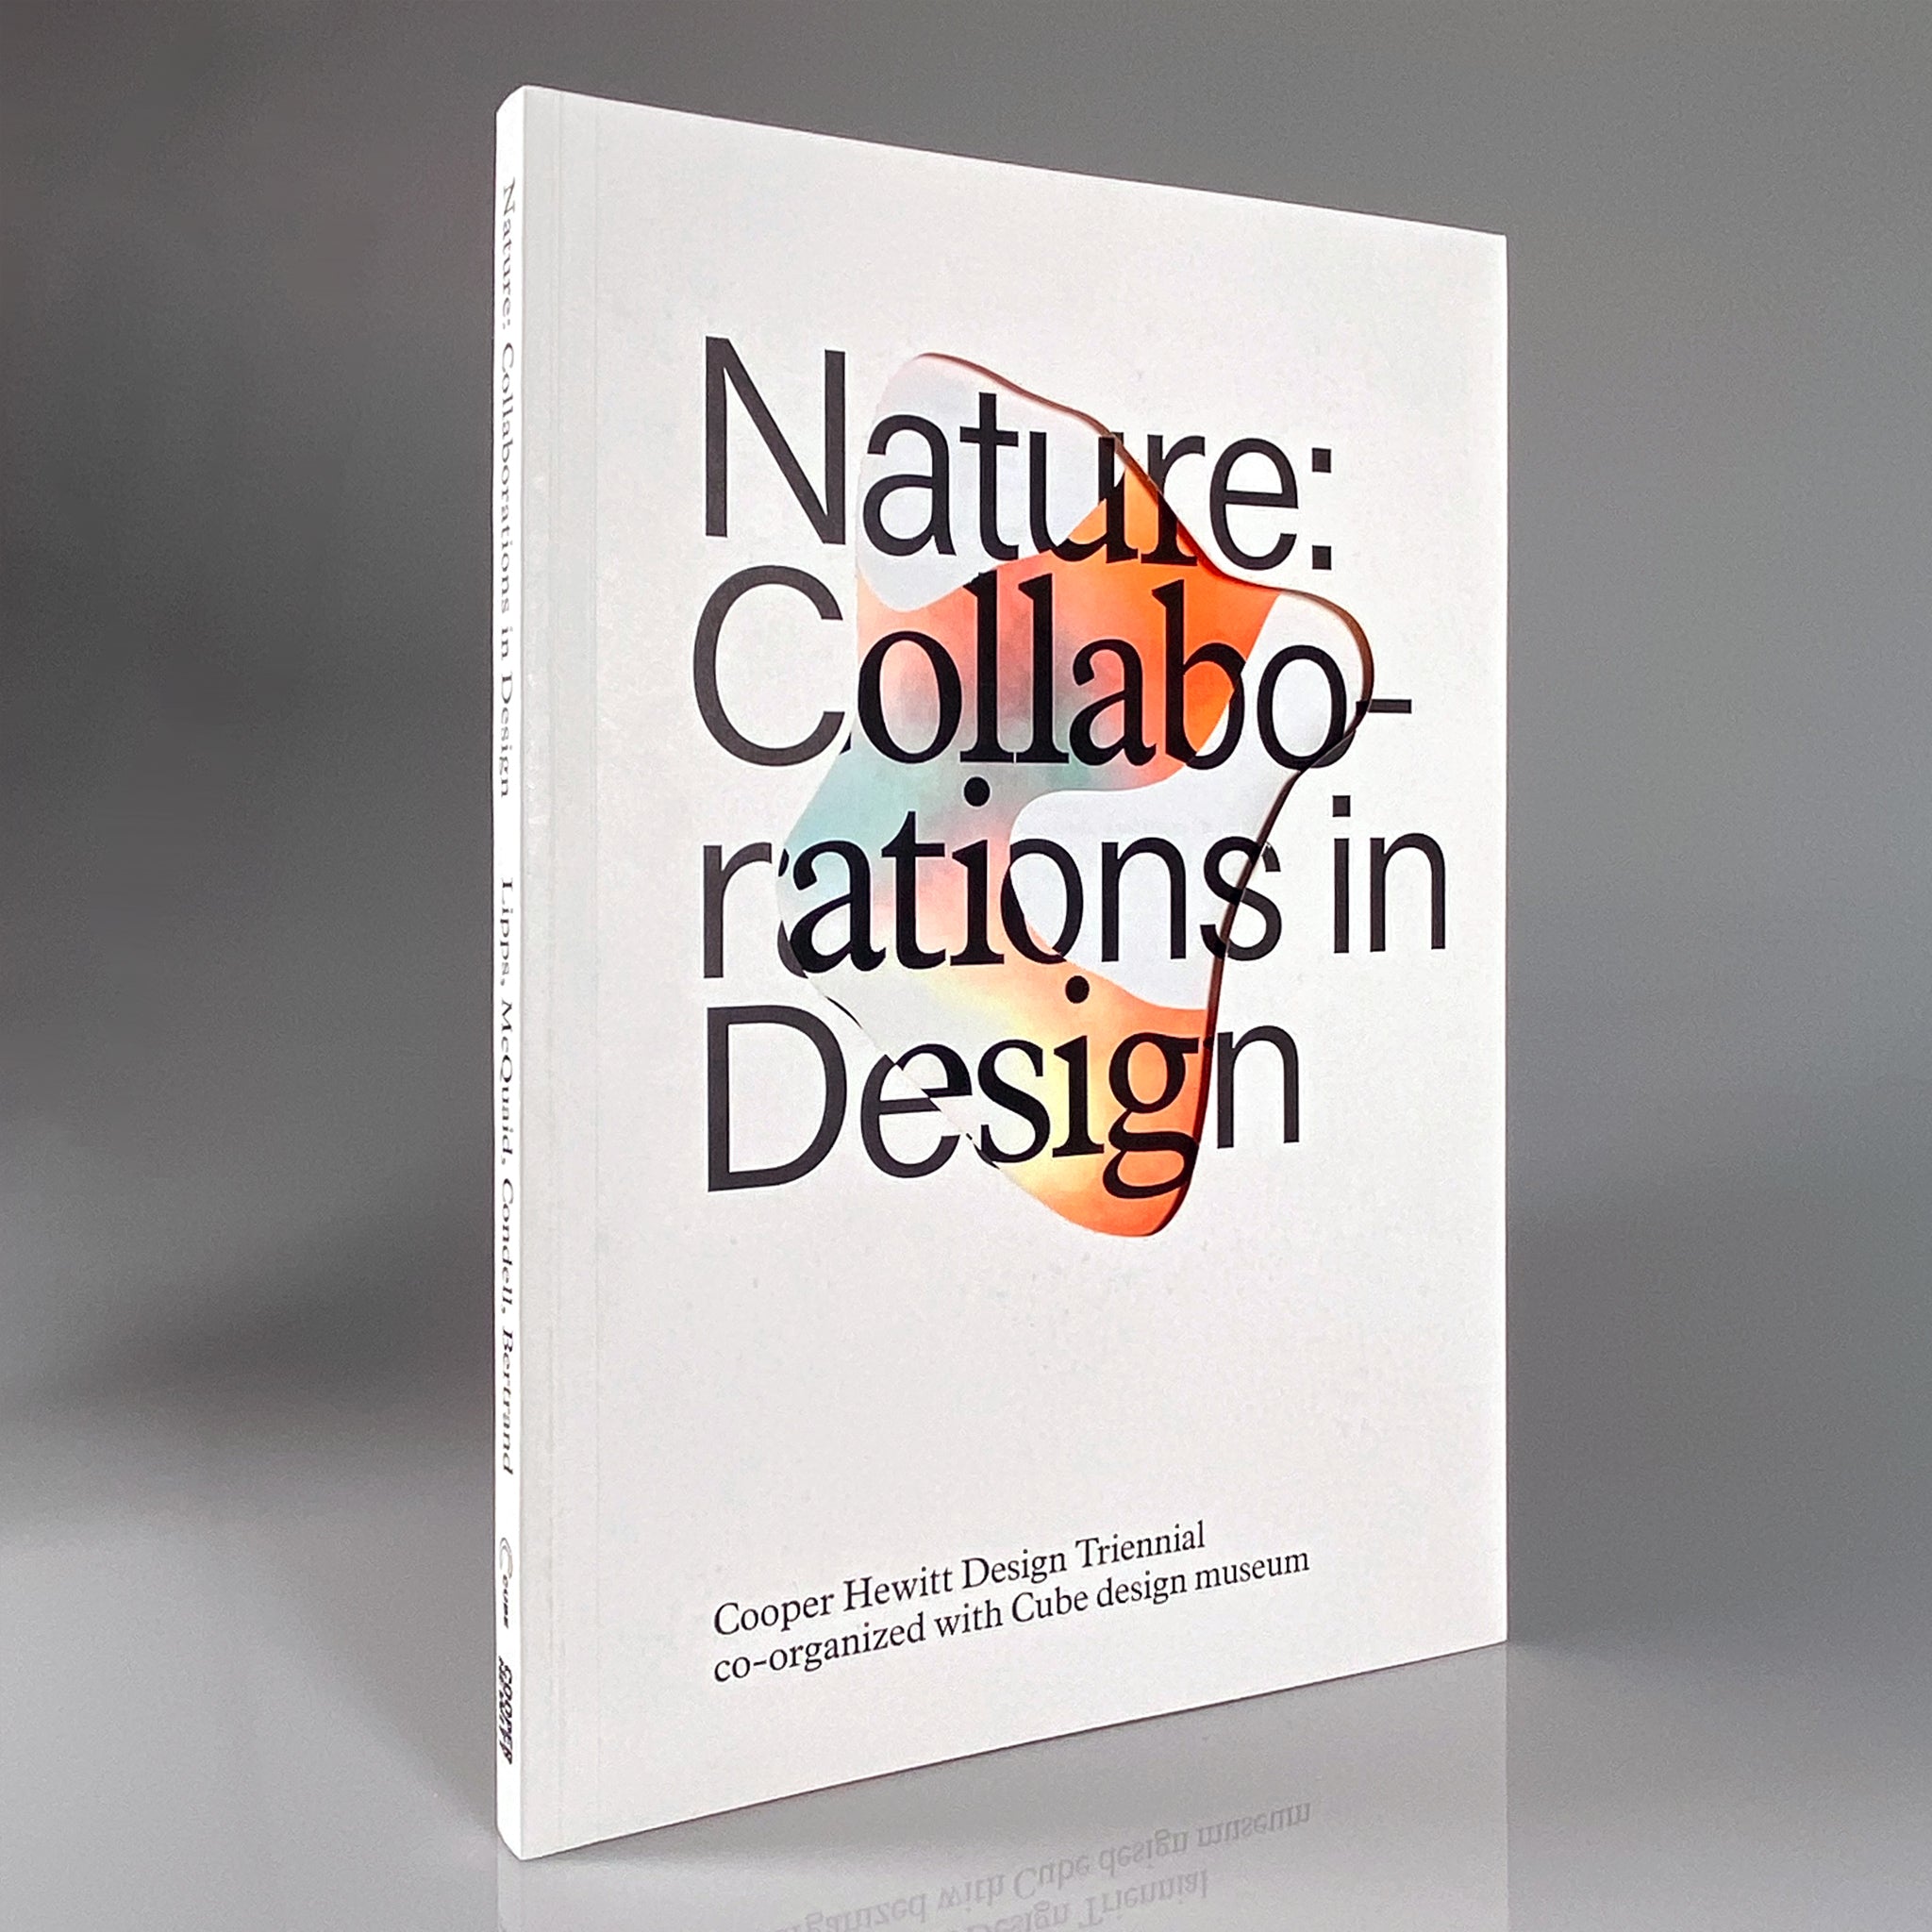 Nature: Collaborations in Design